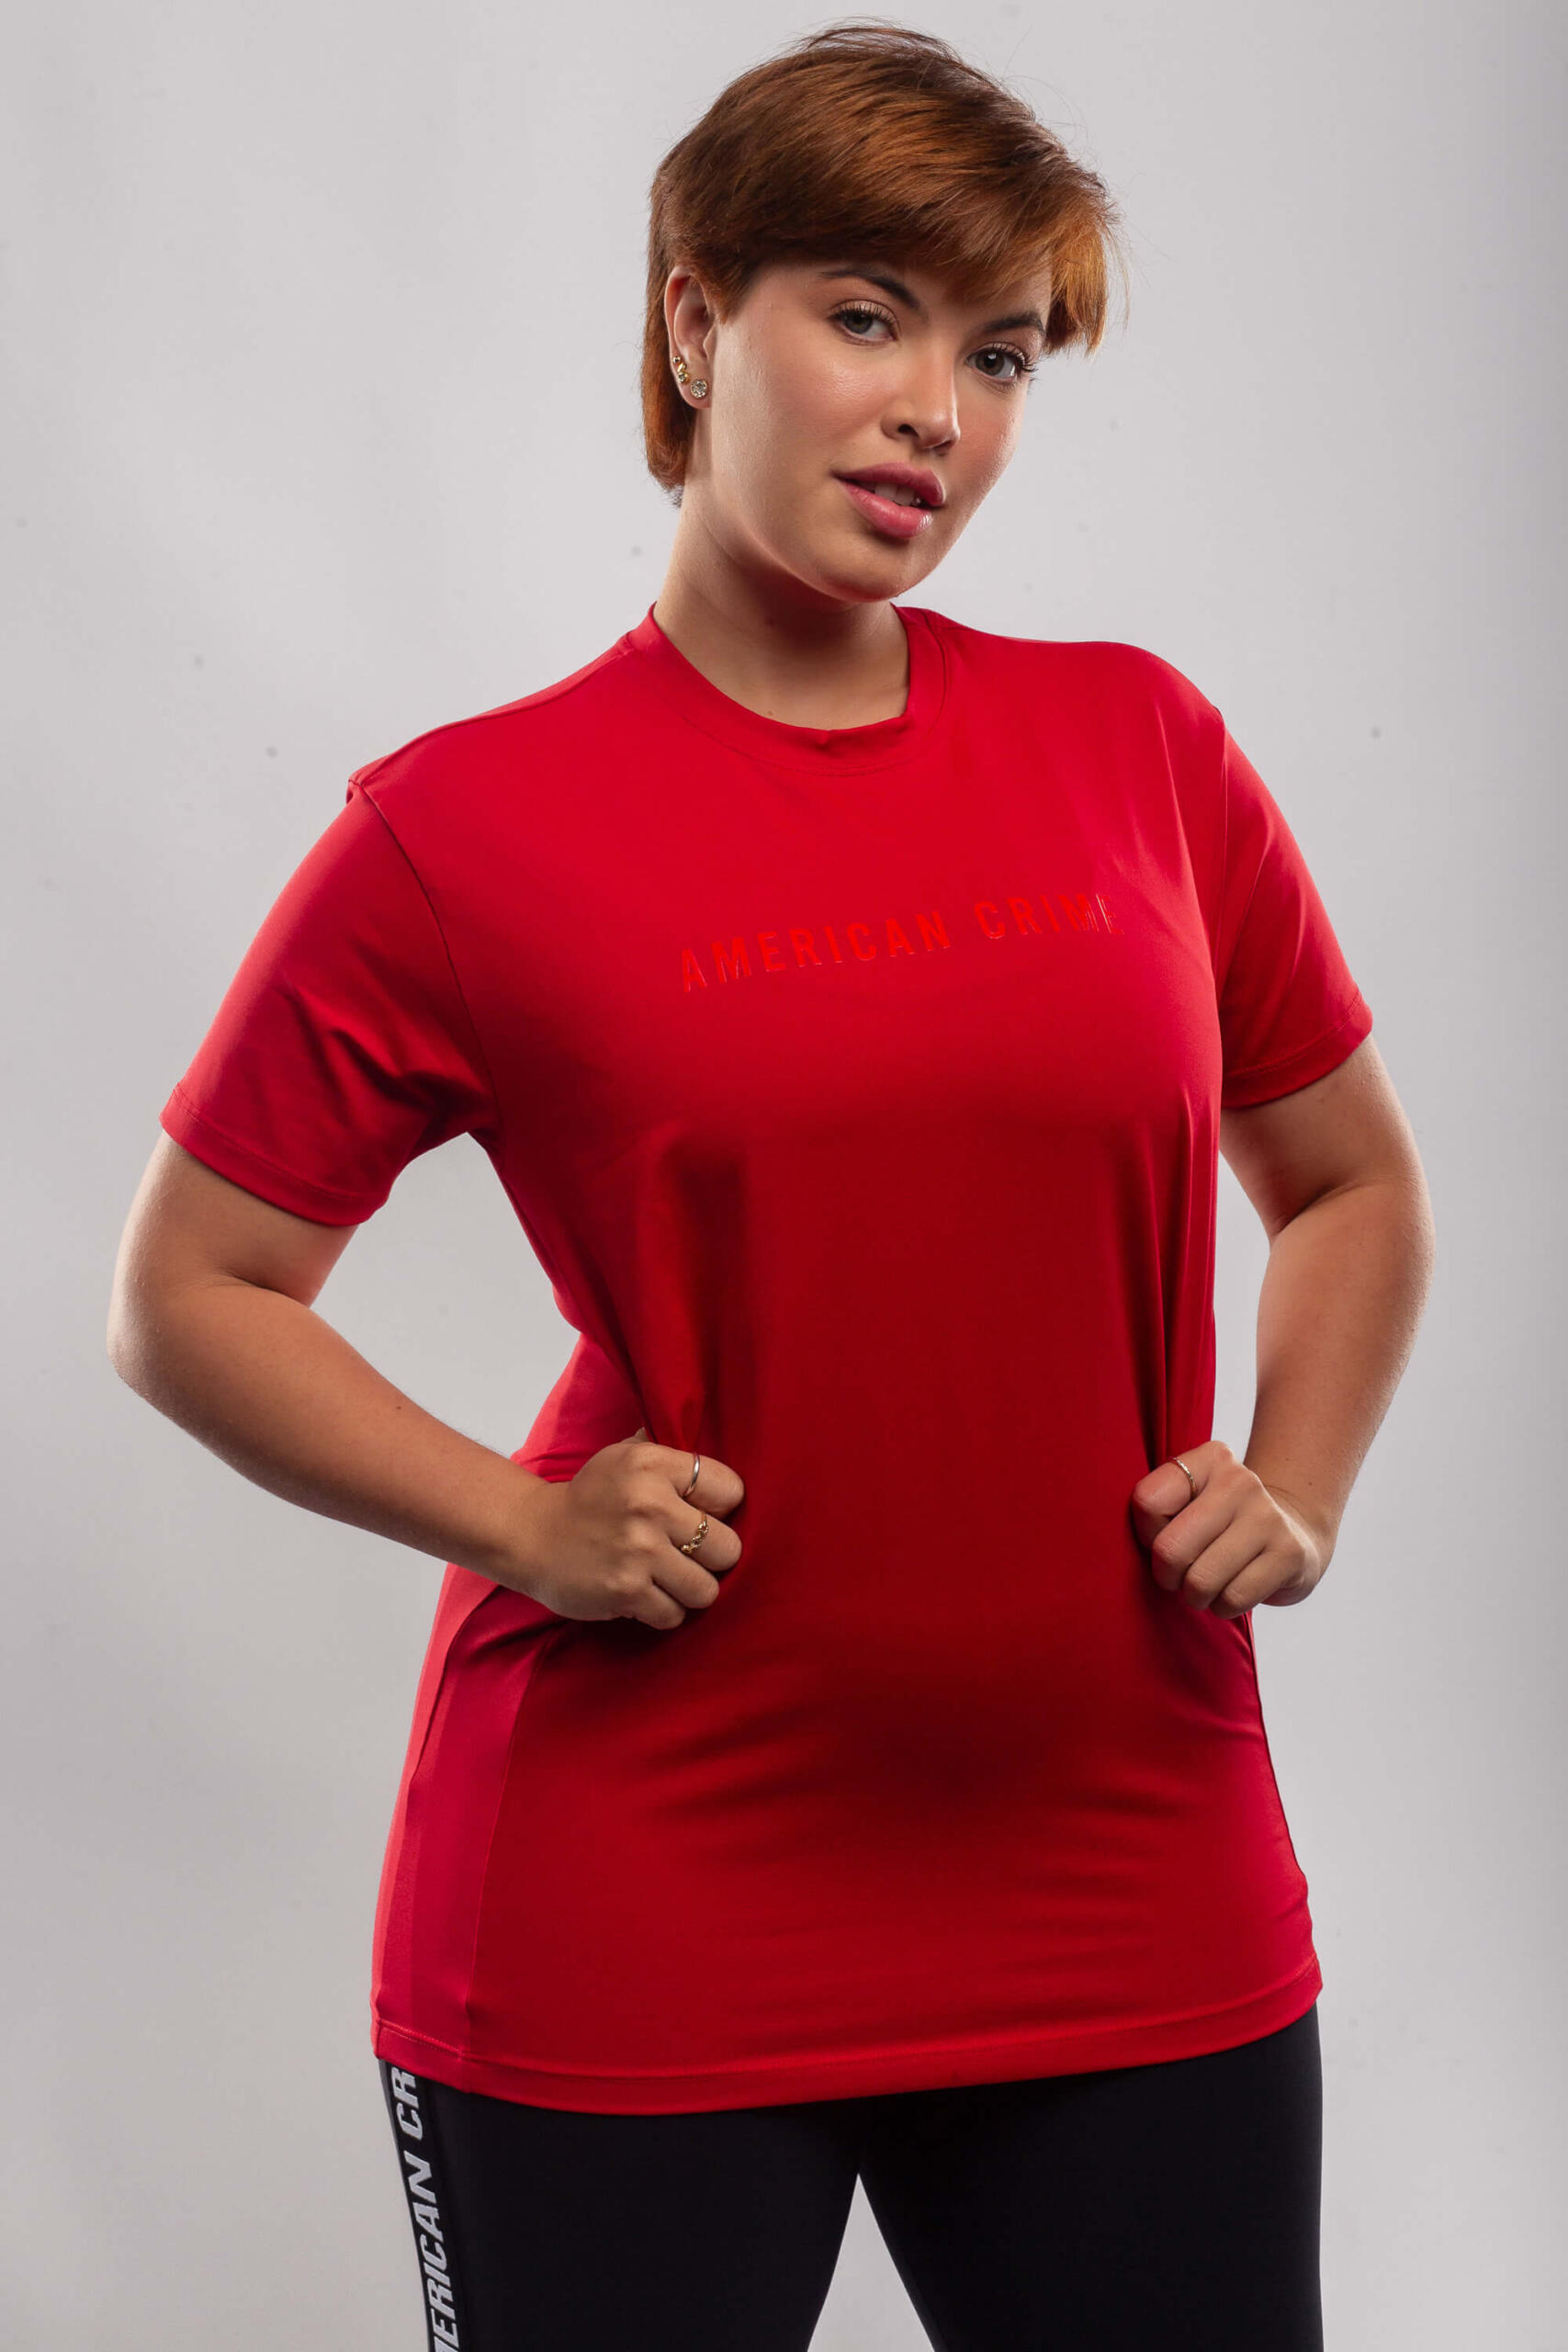 Camiseta Training Cool Redesign Amrc Scarlet Red